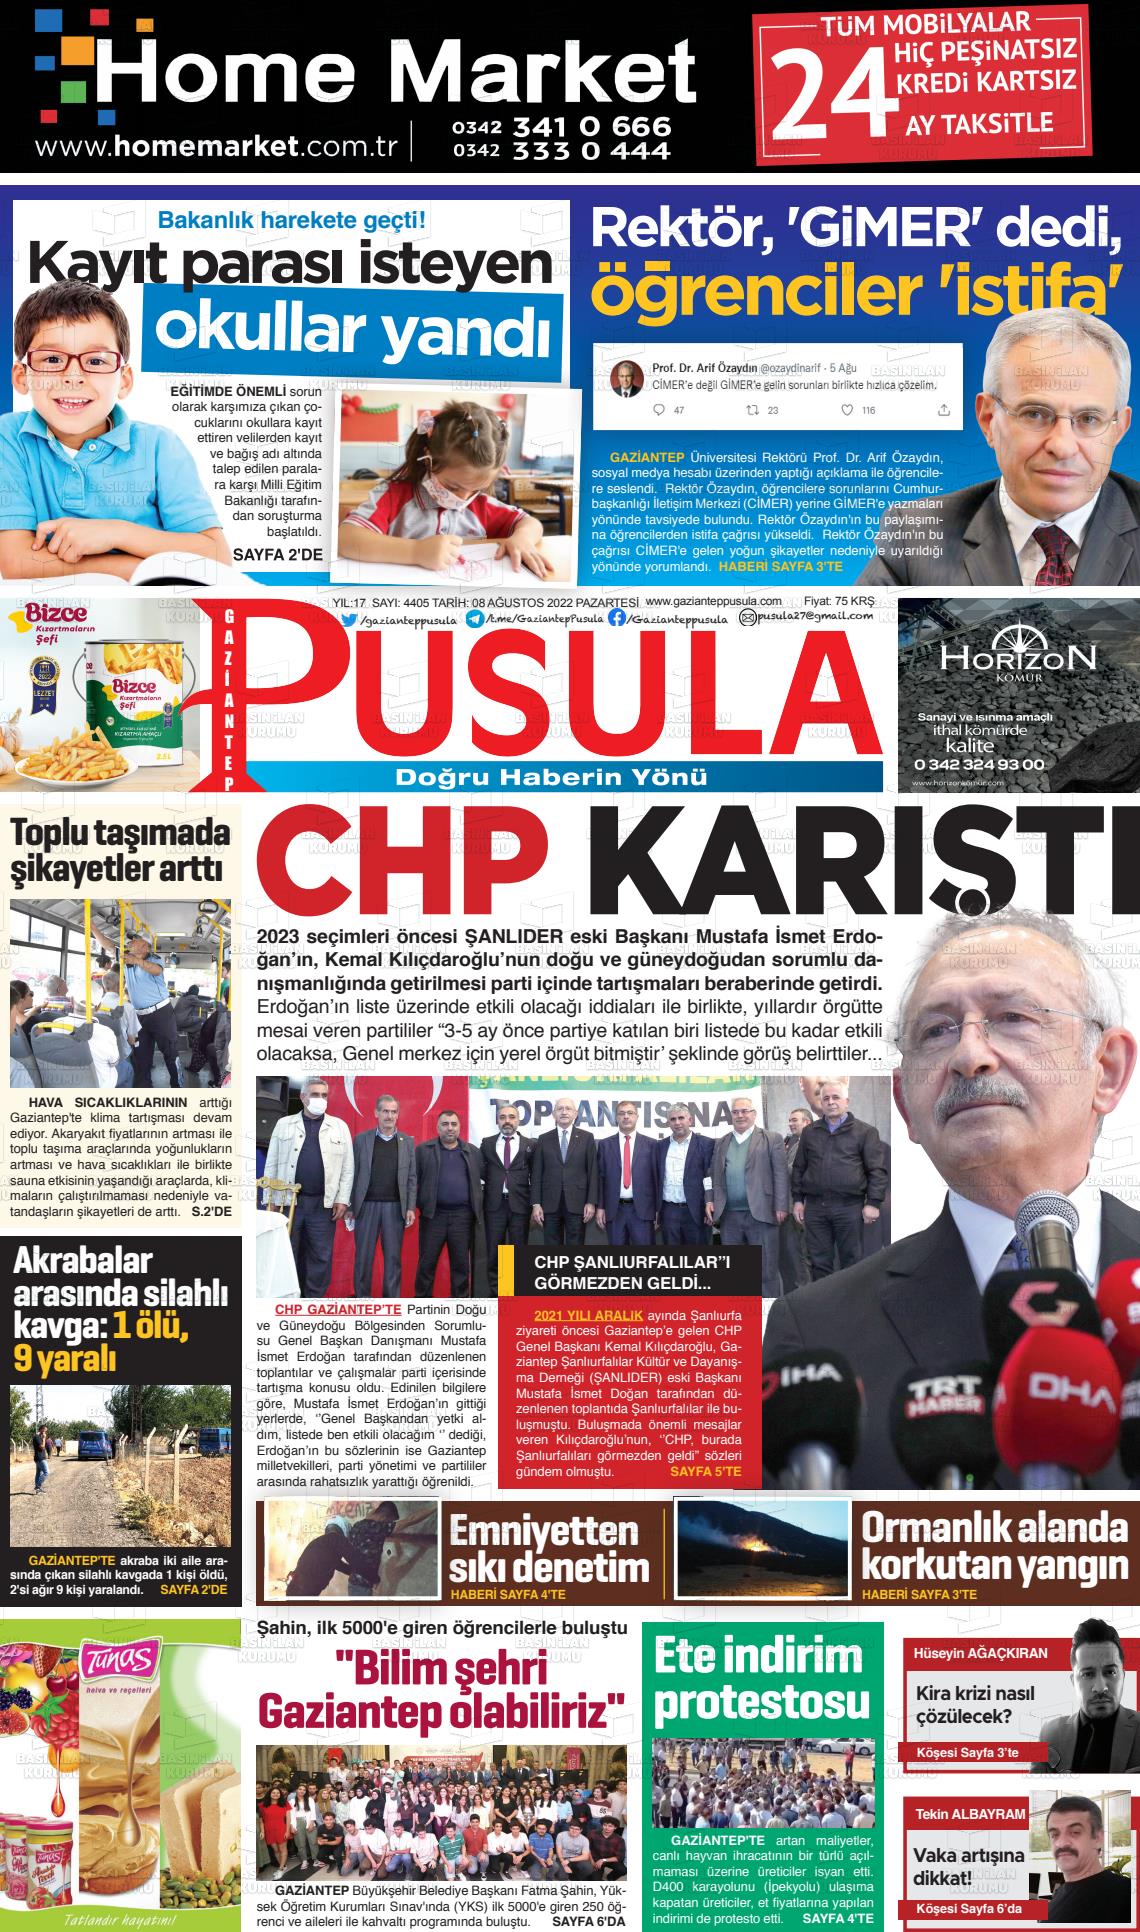 08 Ağustos 2022 Gaziantep Pusula Gazete Manşeti